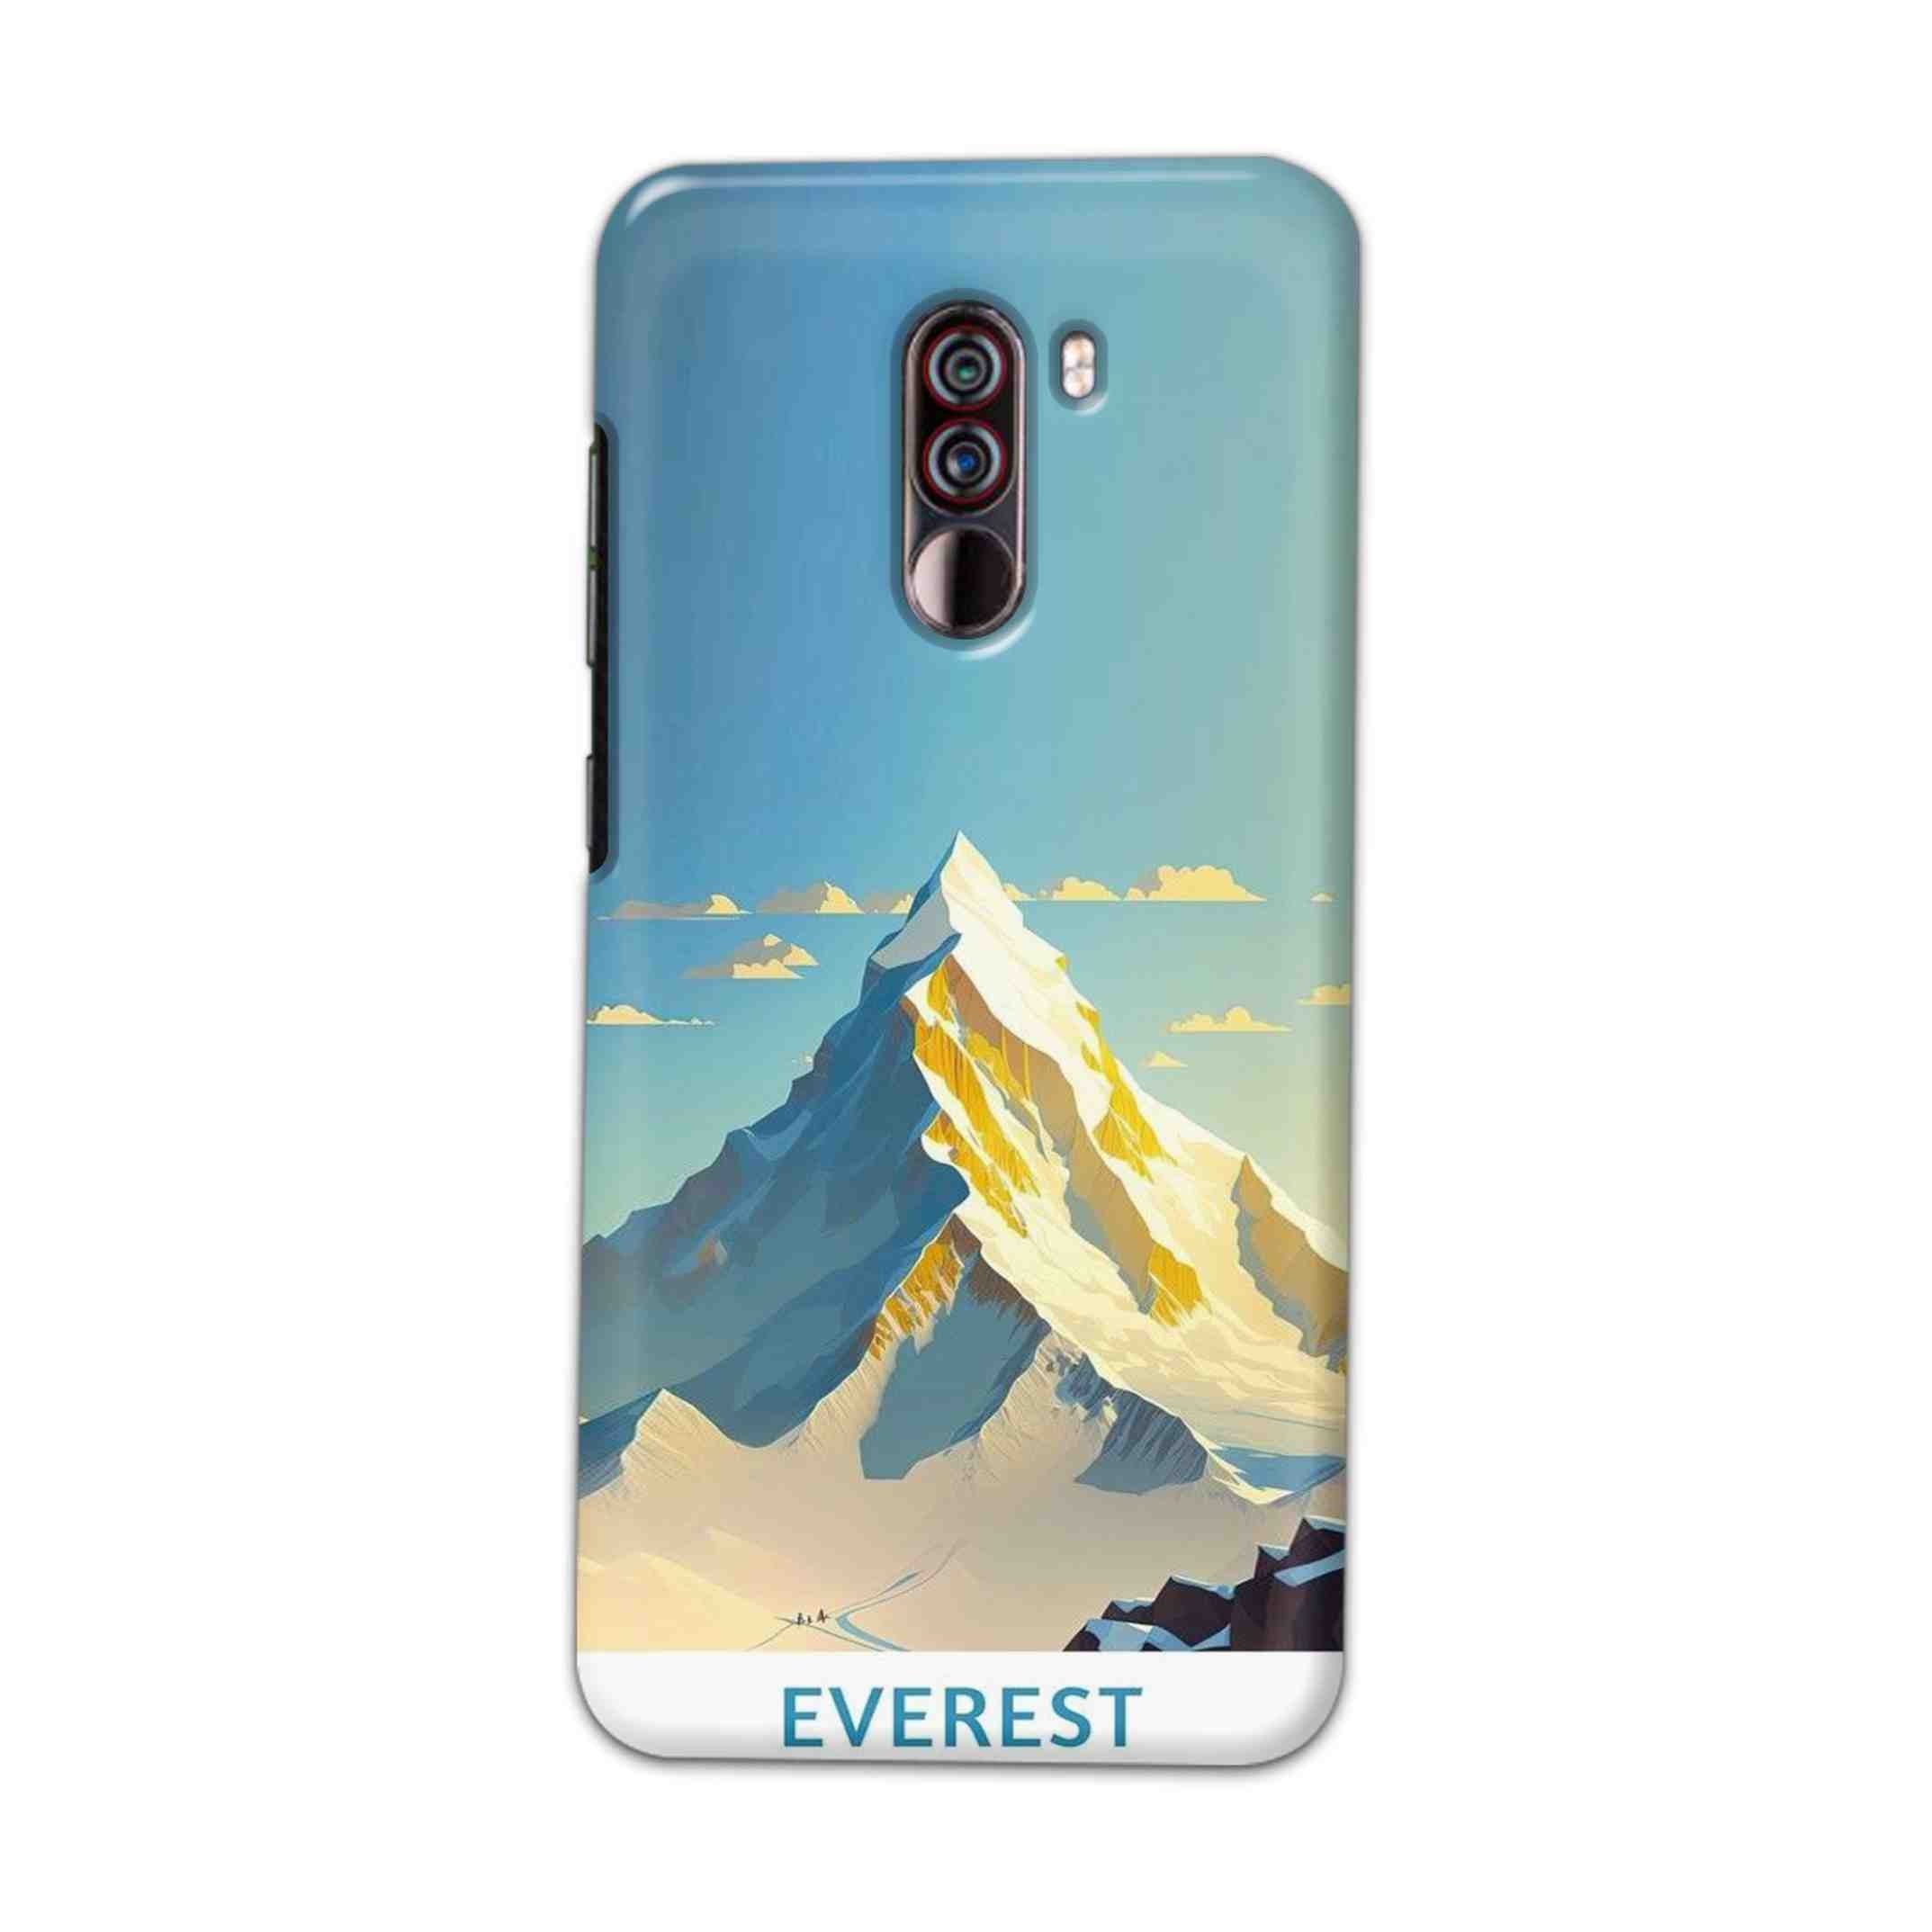 Buy Everest Hard Back Mobile Phone Case Cover For Xiaomi Pocophone F1 Online